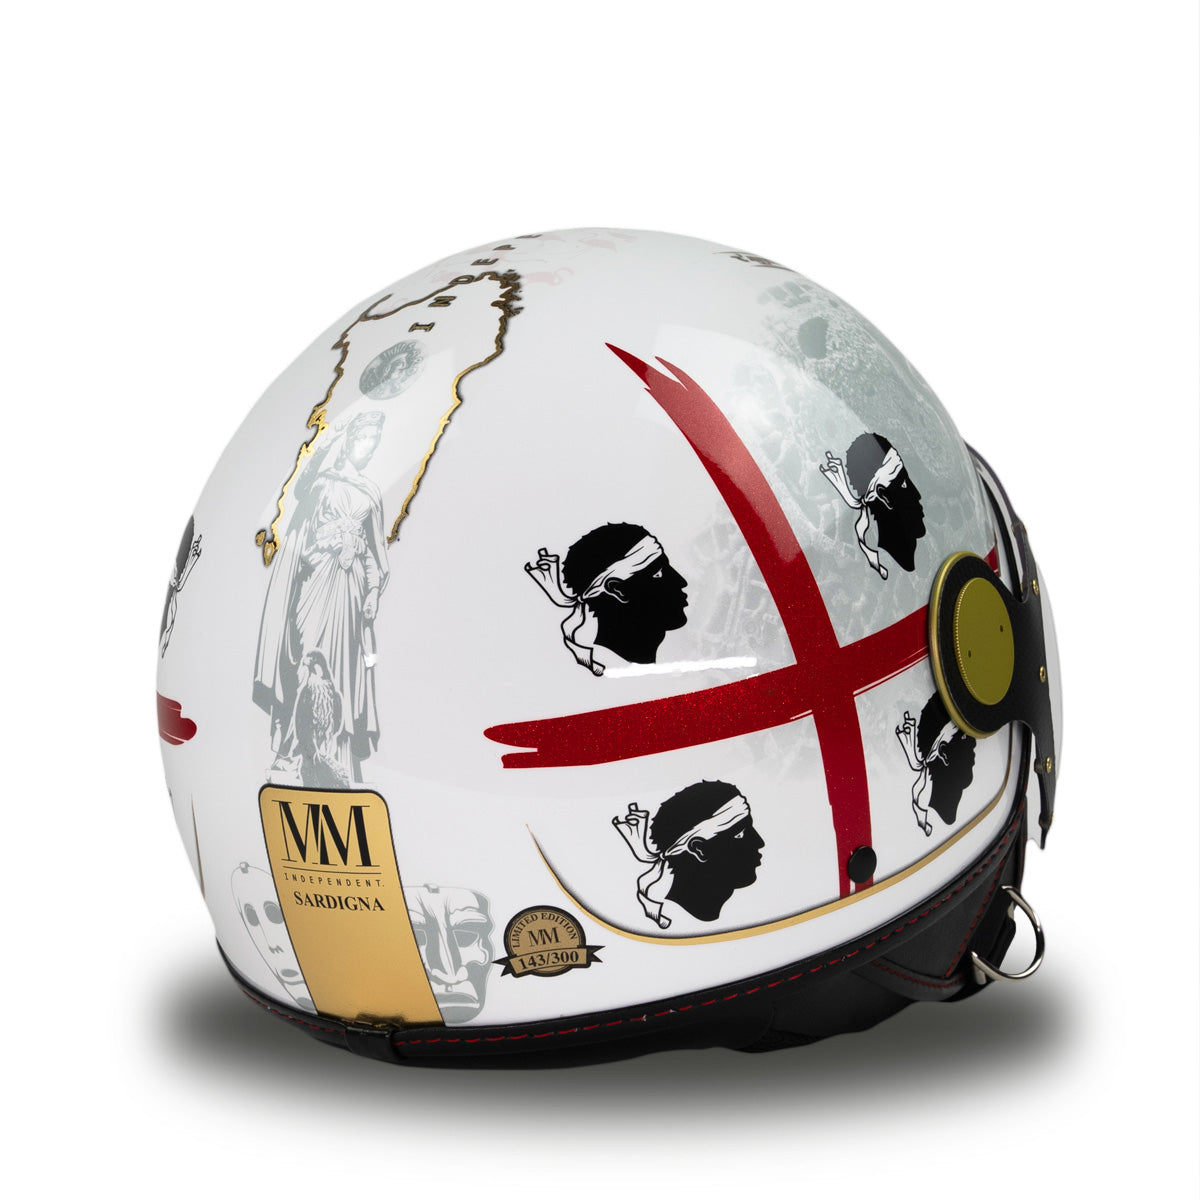 Sardinia 2.0 MM Independent LIMITED EDITION Helmet